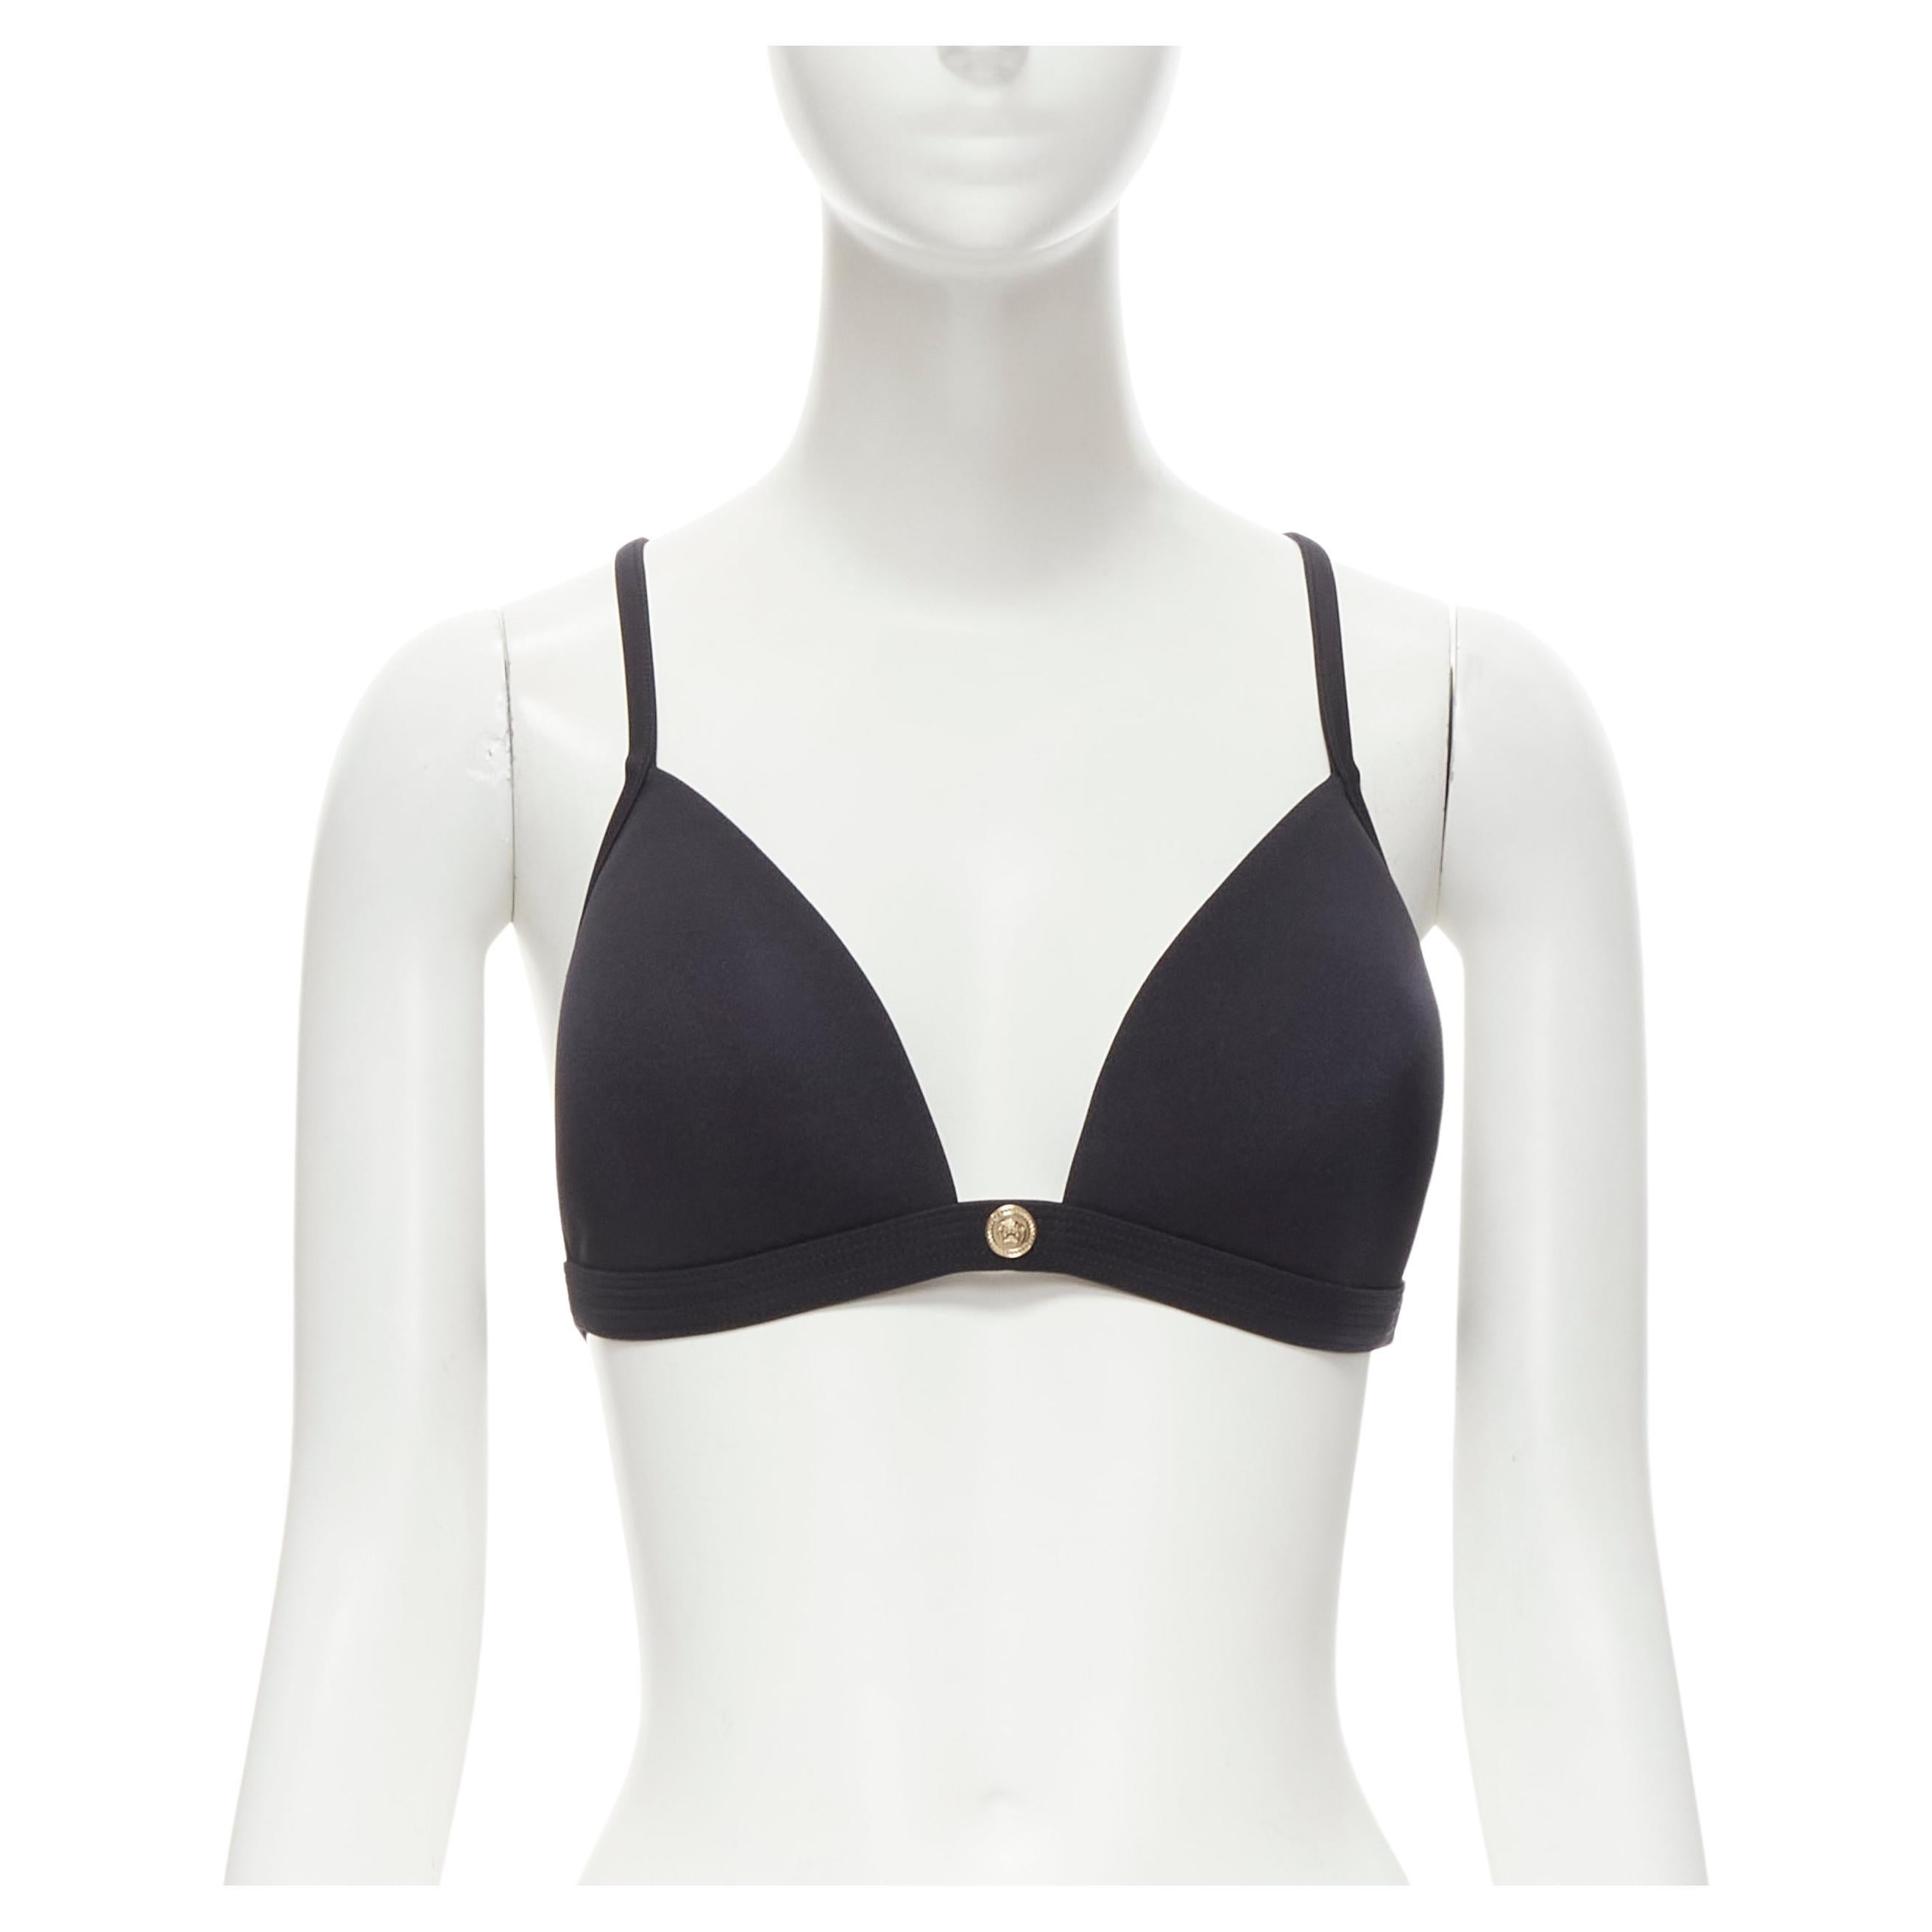 new VERSACE Beachwear black padded gold Medusa button triangle bikini top Sz.4 M